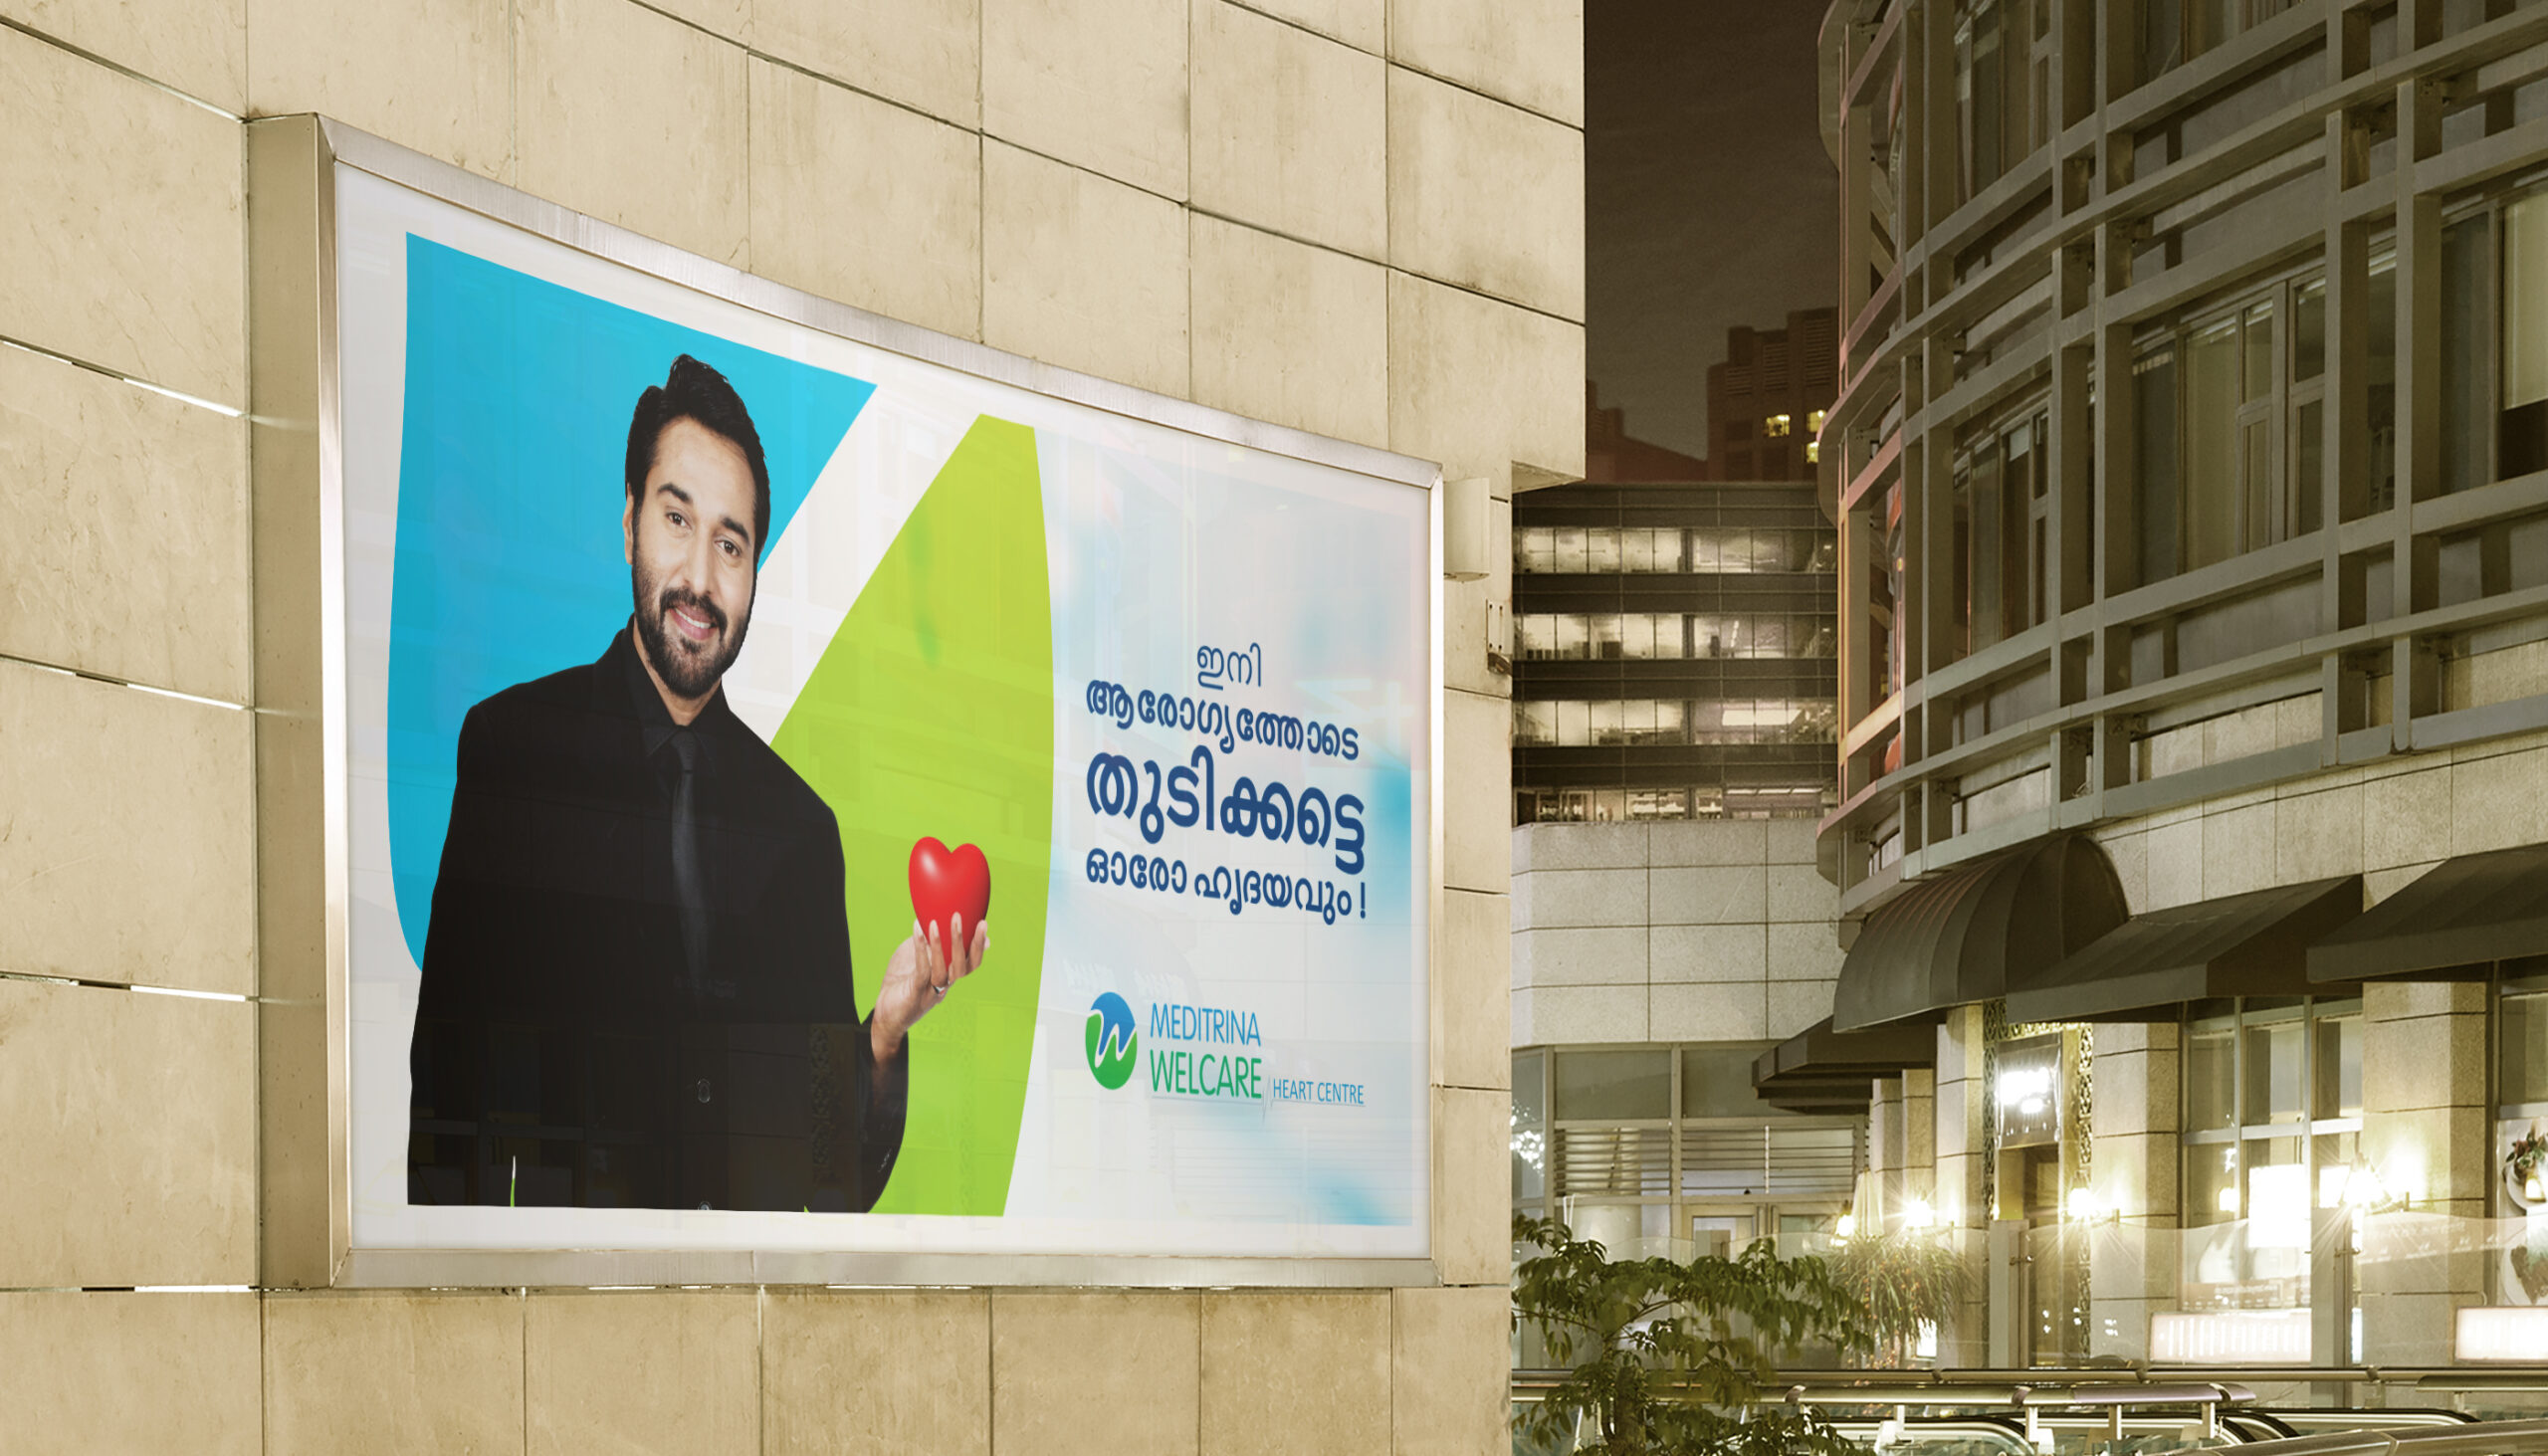 Actor Rahman on Meditrina Welcare Hospital Billboard Design